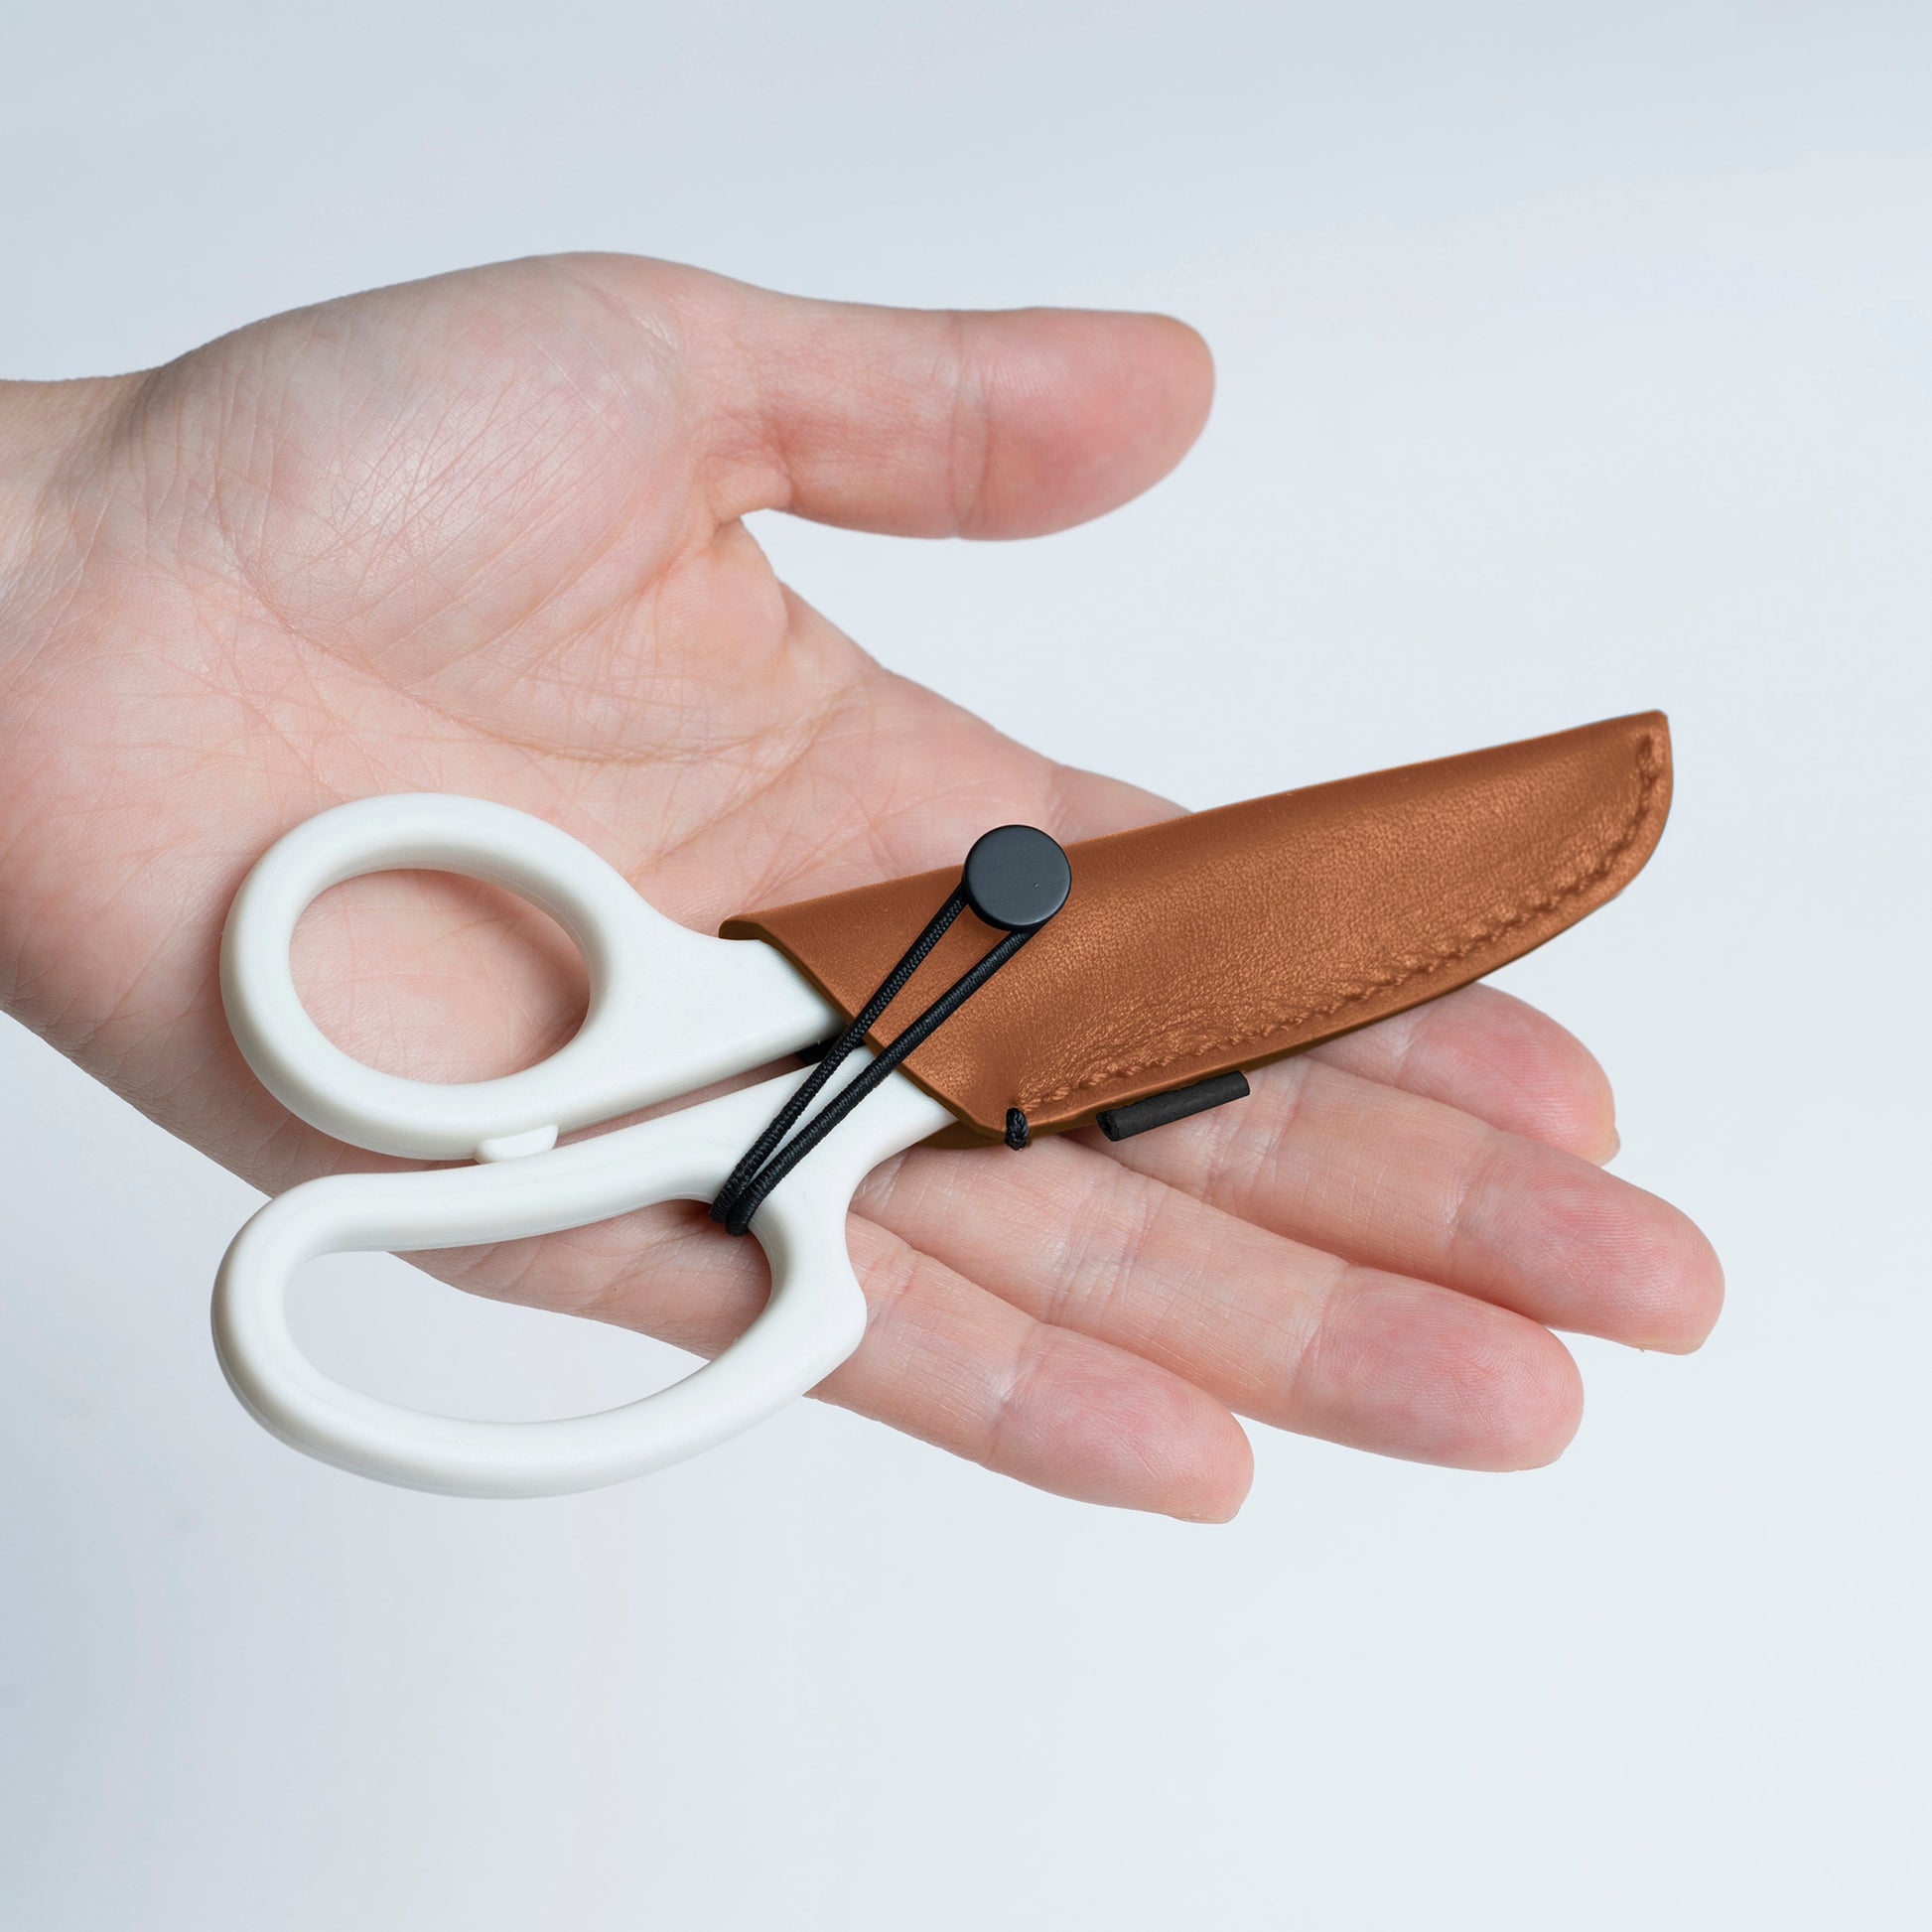 exacto scissors, scissors, leather case